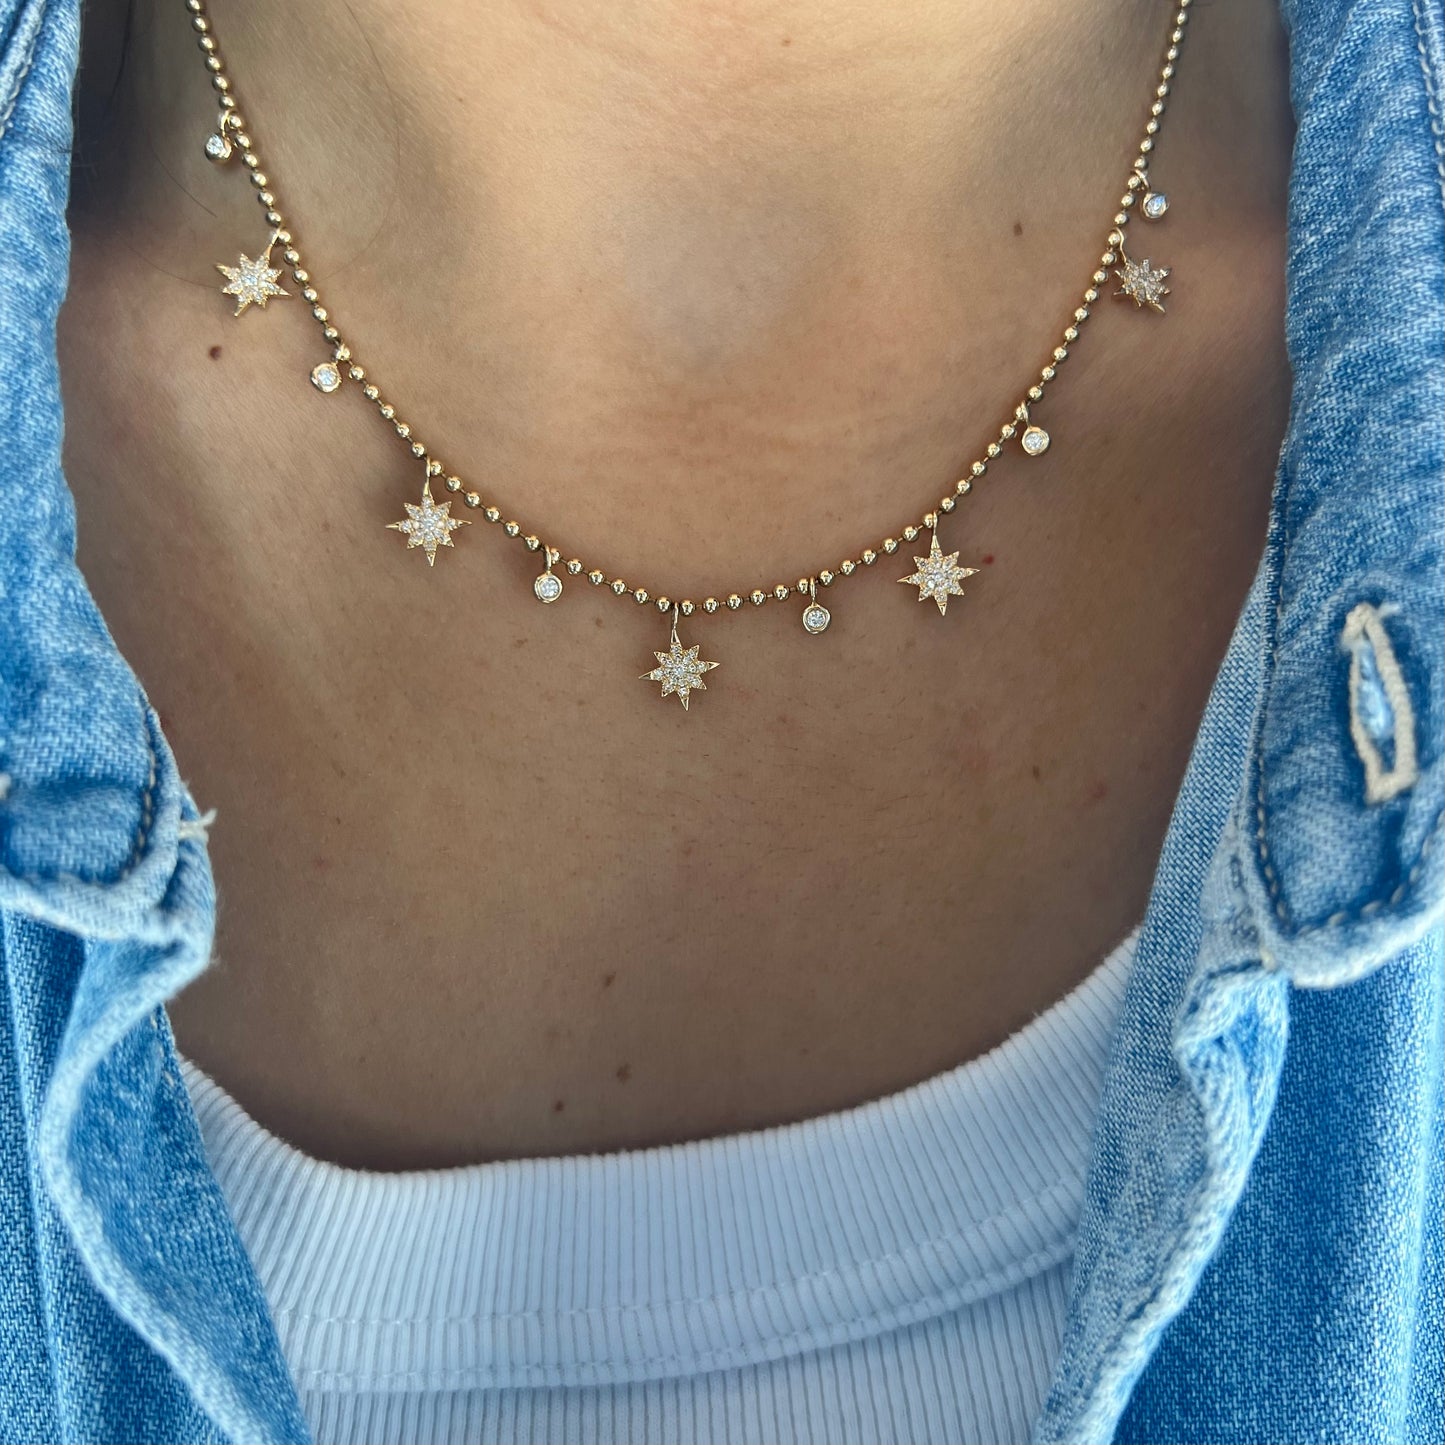 Ball Chain Necklace W Hanging Bezels & Diamond Stars